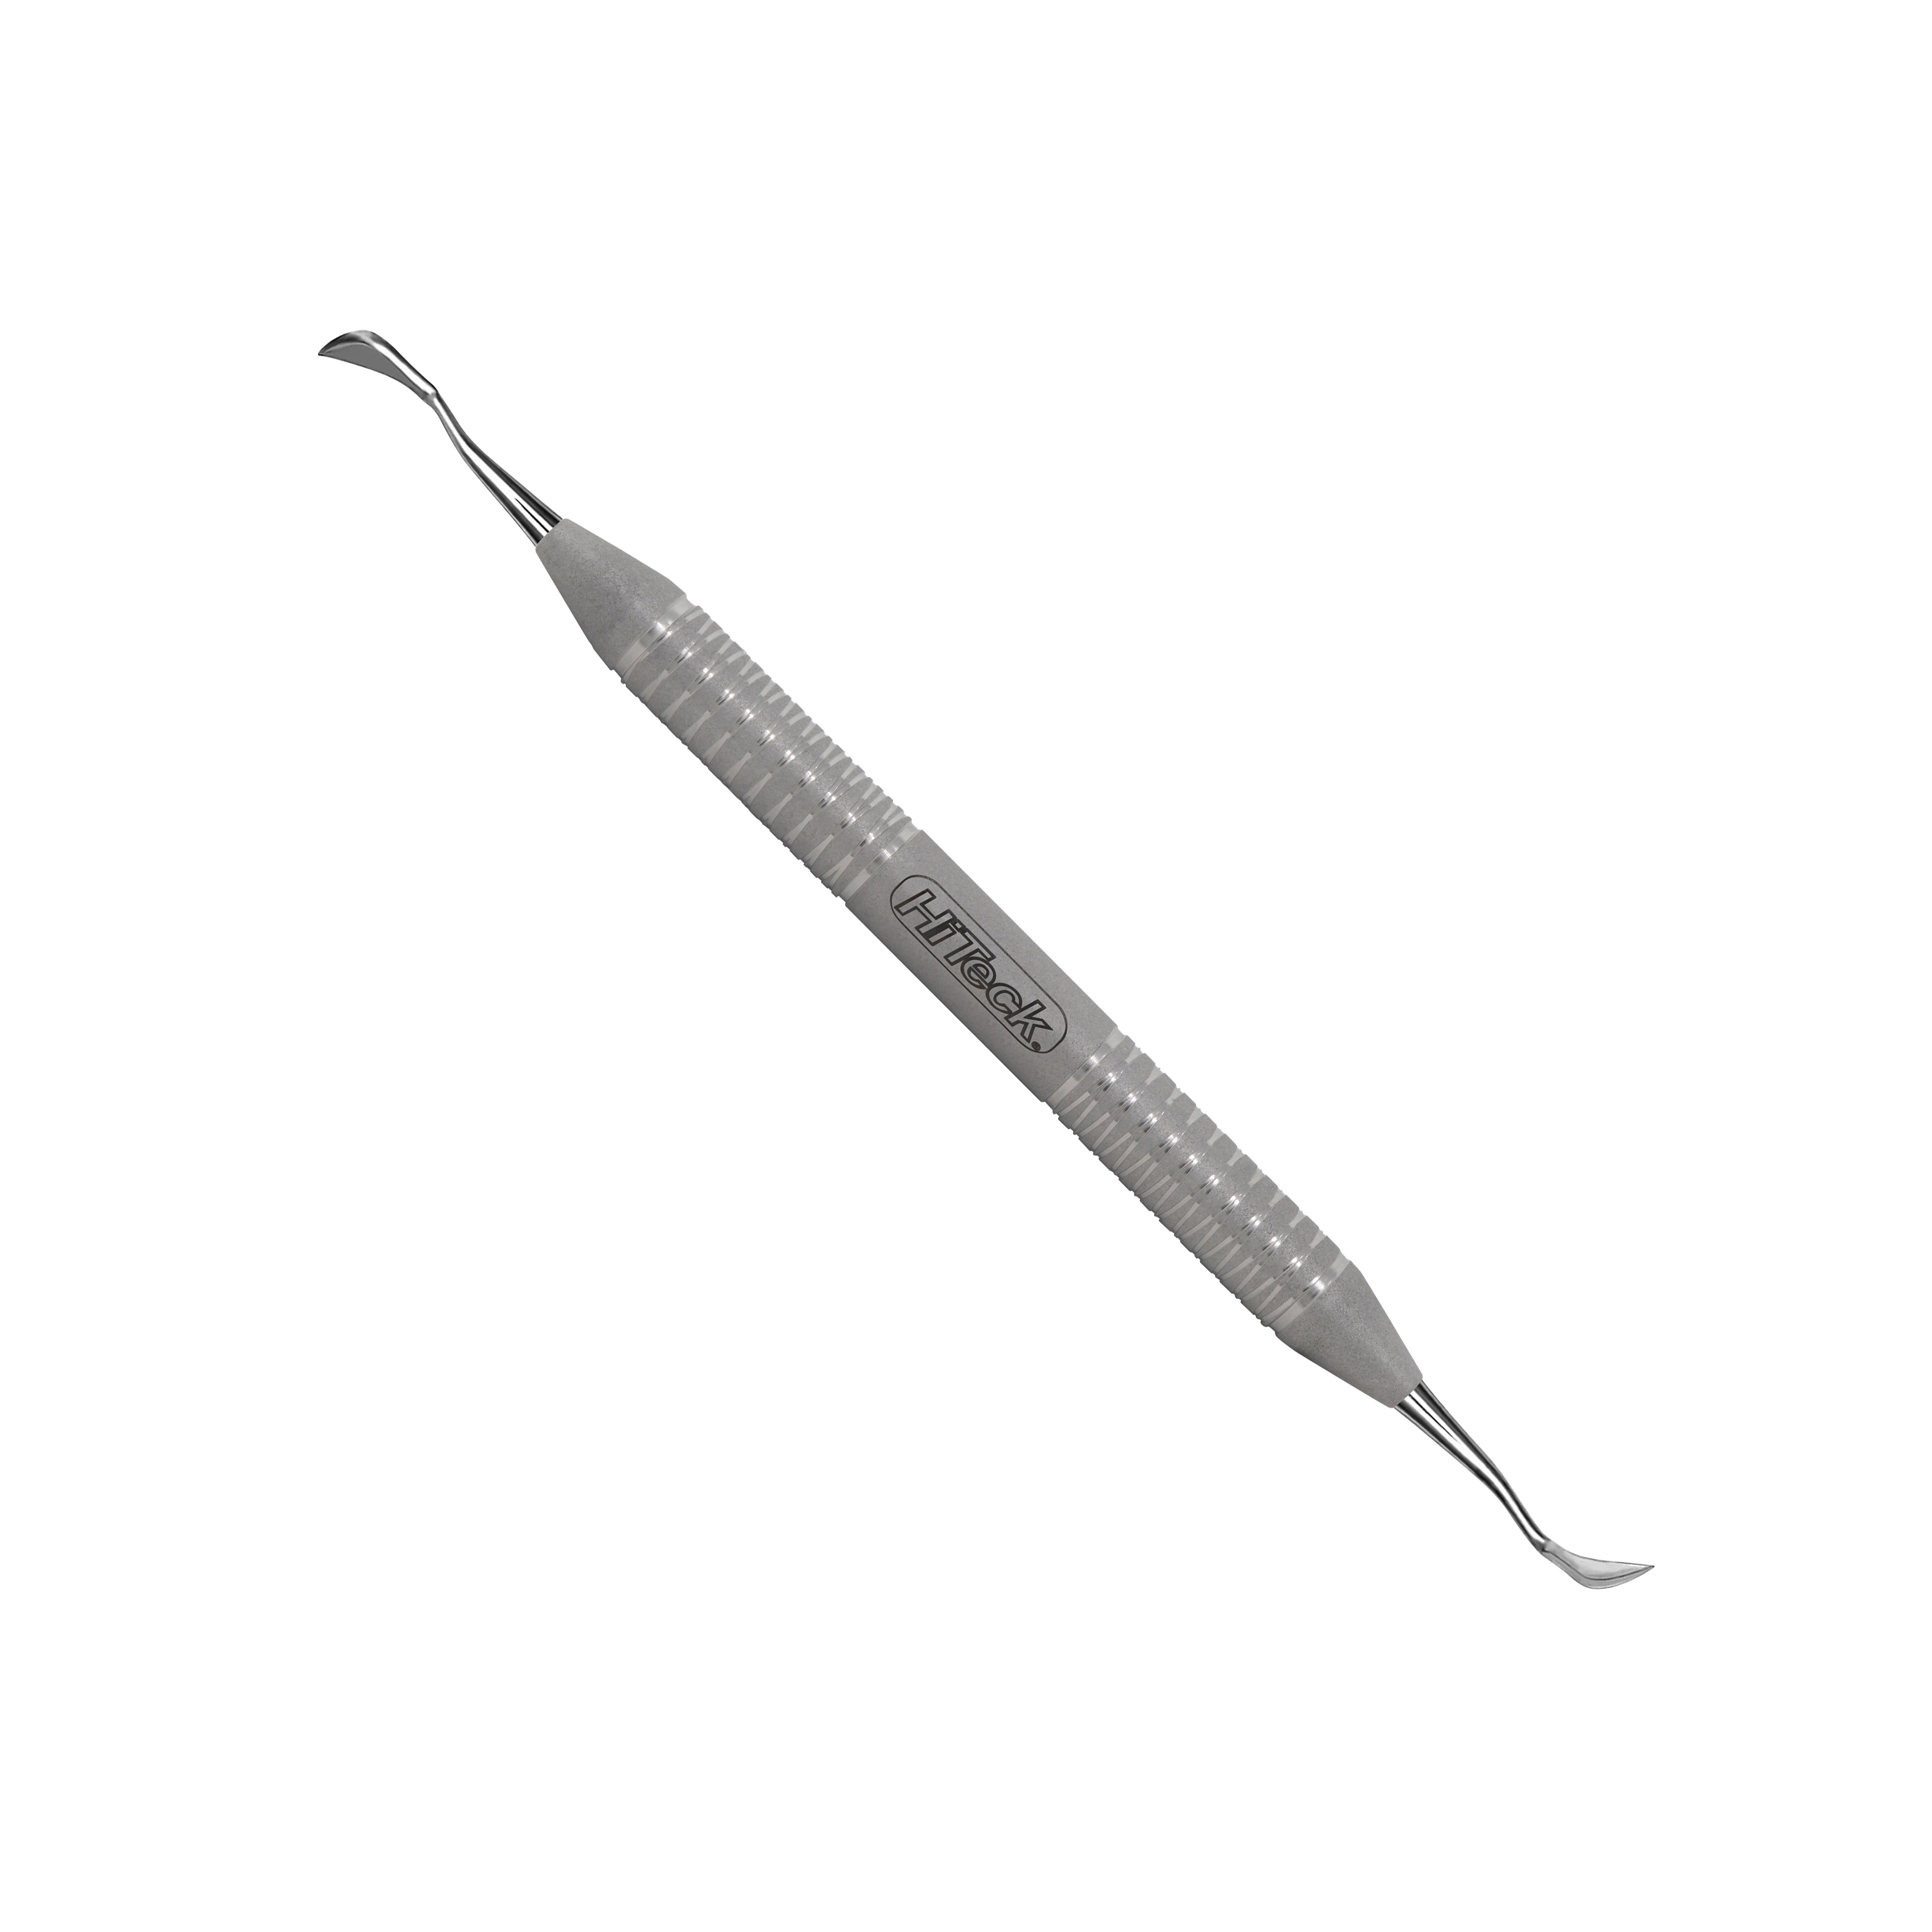 1/2 Solt Periodontal Knife - HiTeck Medical Instruments